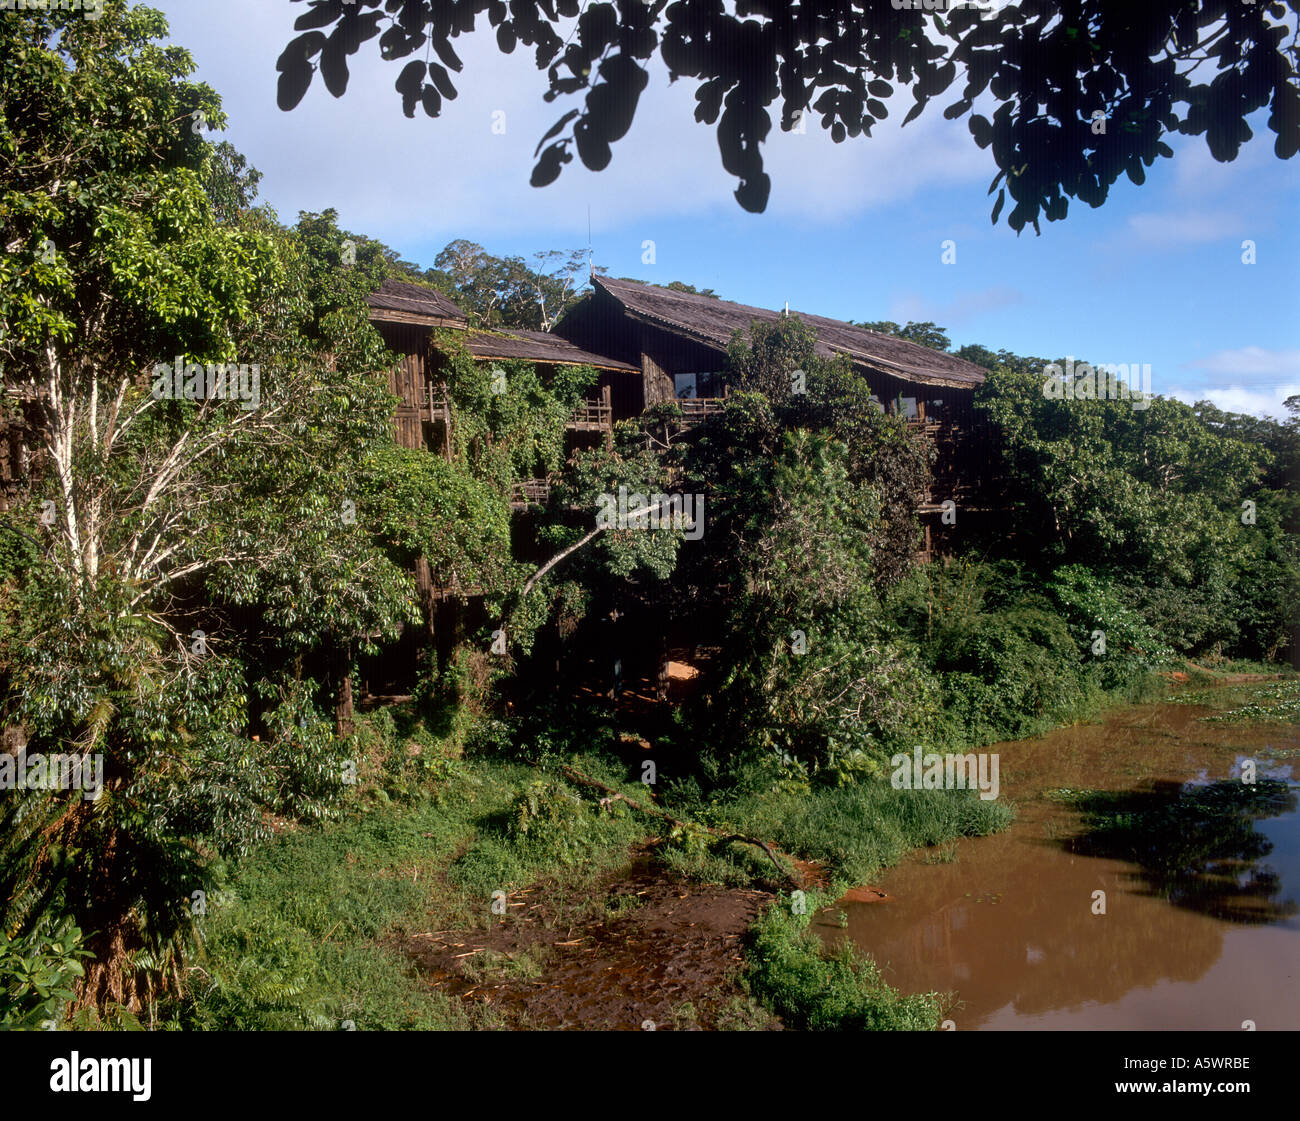 Shimba Hills Lodge, le site Shimba Hills National Reserve, près de Mombasa, Kenya, Afrique de l'Est Banque D'Images